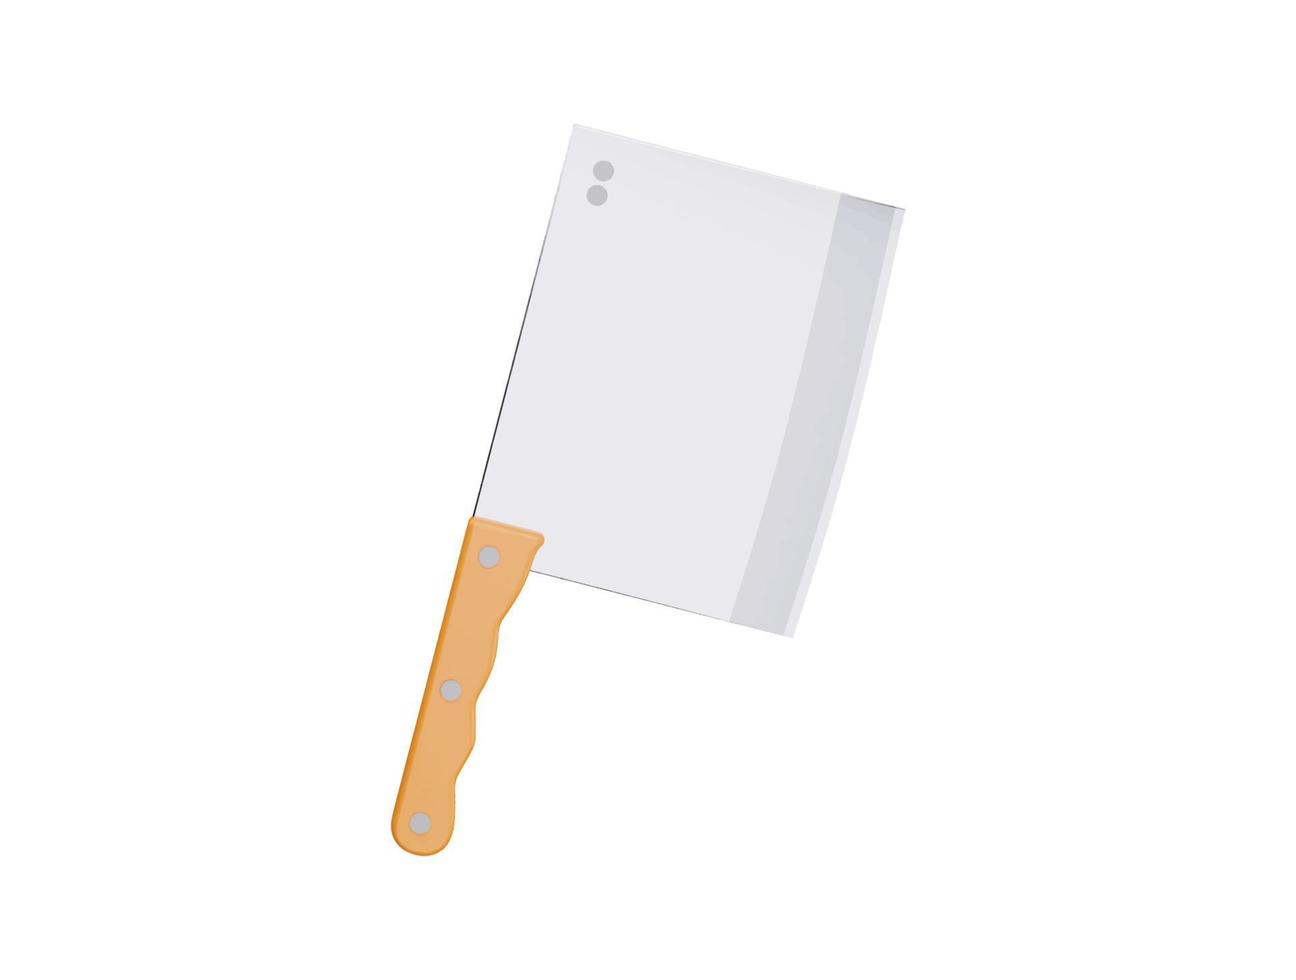 Knife 3d vector icon cartoon minimal style